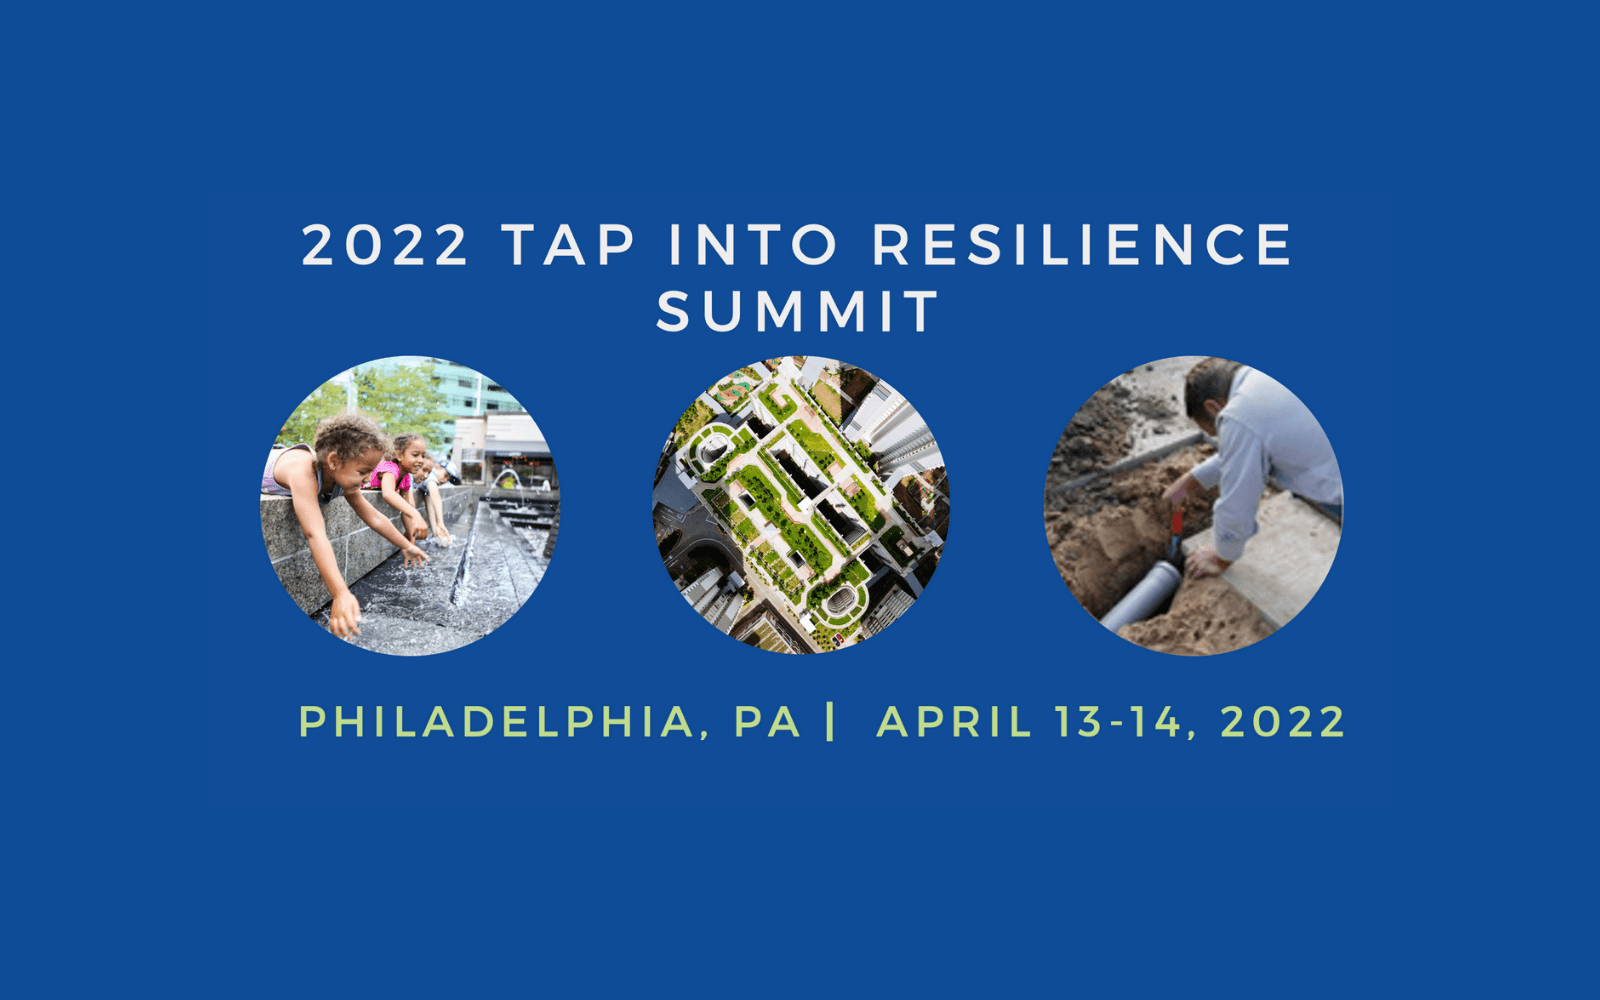 2022 Tap Into Resilience Summit. Philadelphia, PA. April 13-14, 2022.